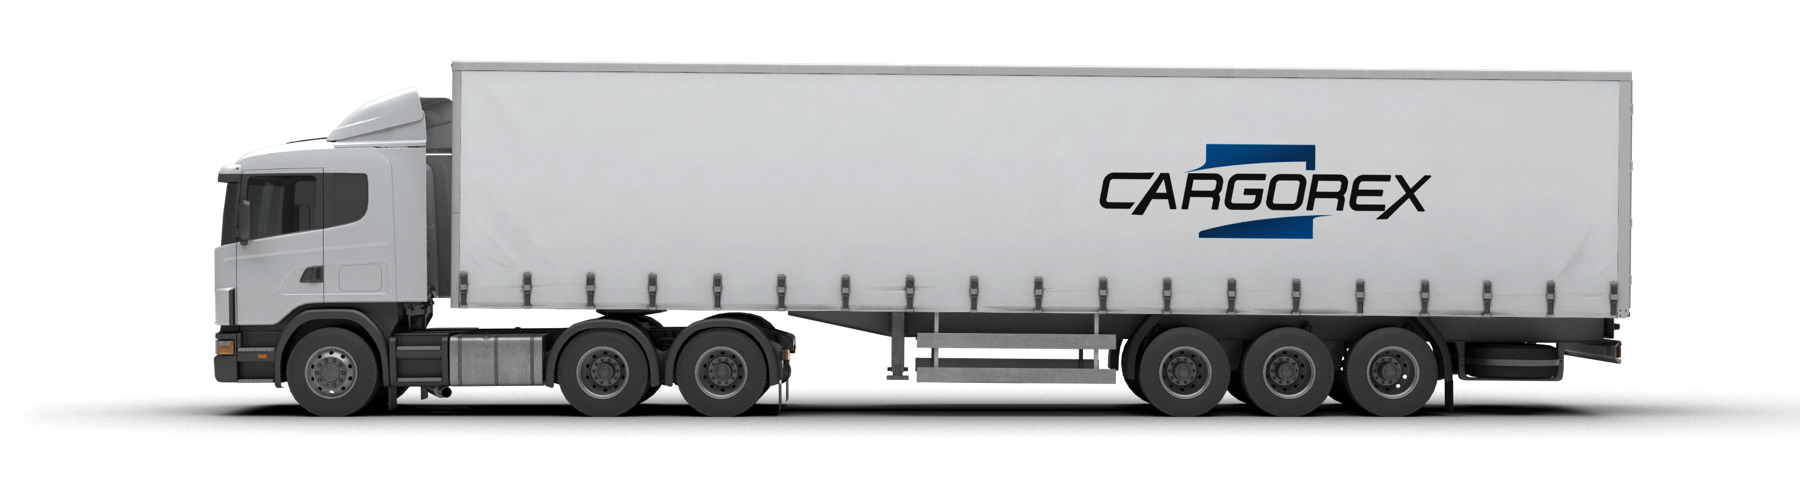 Cargorexpsd online - Nottinghamshire Freight Services